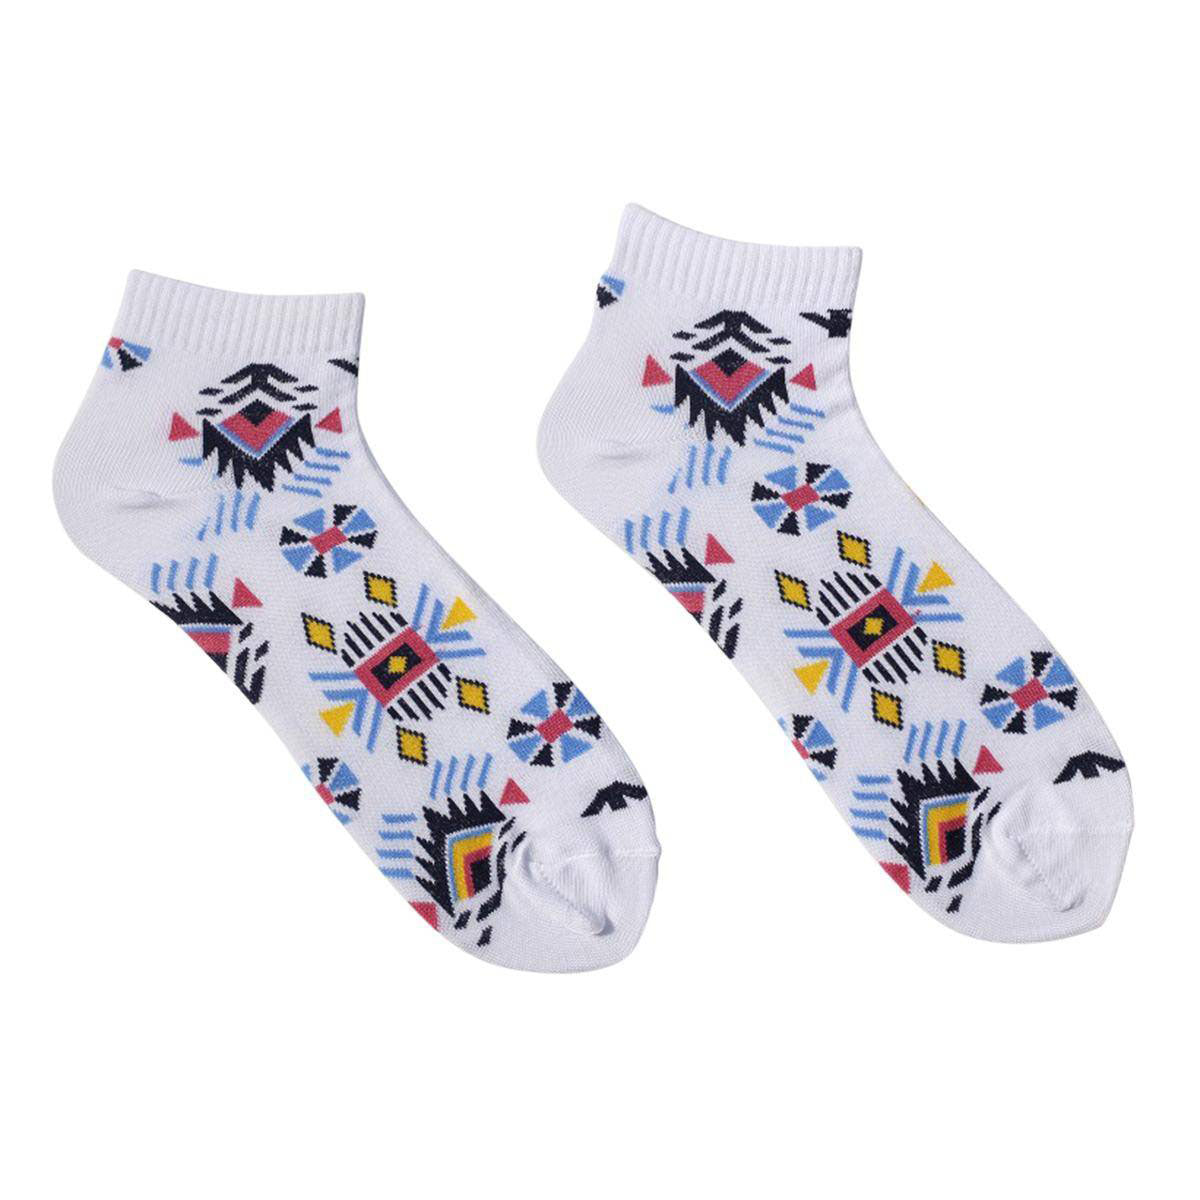 Cotton Premium Ankle Socks for Women